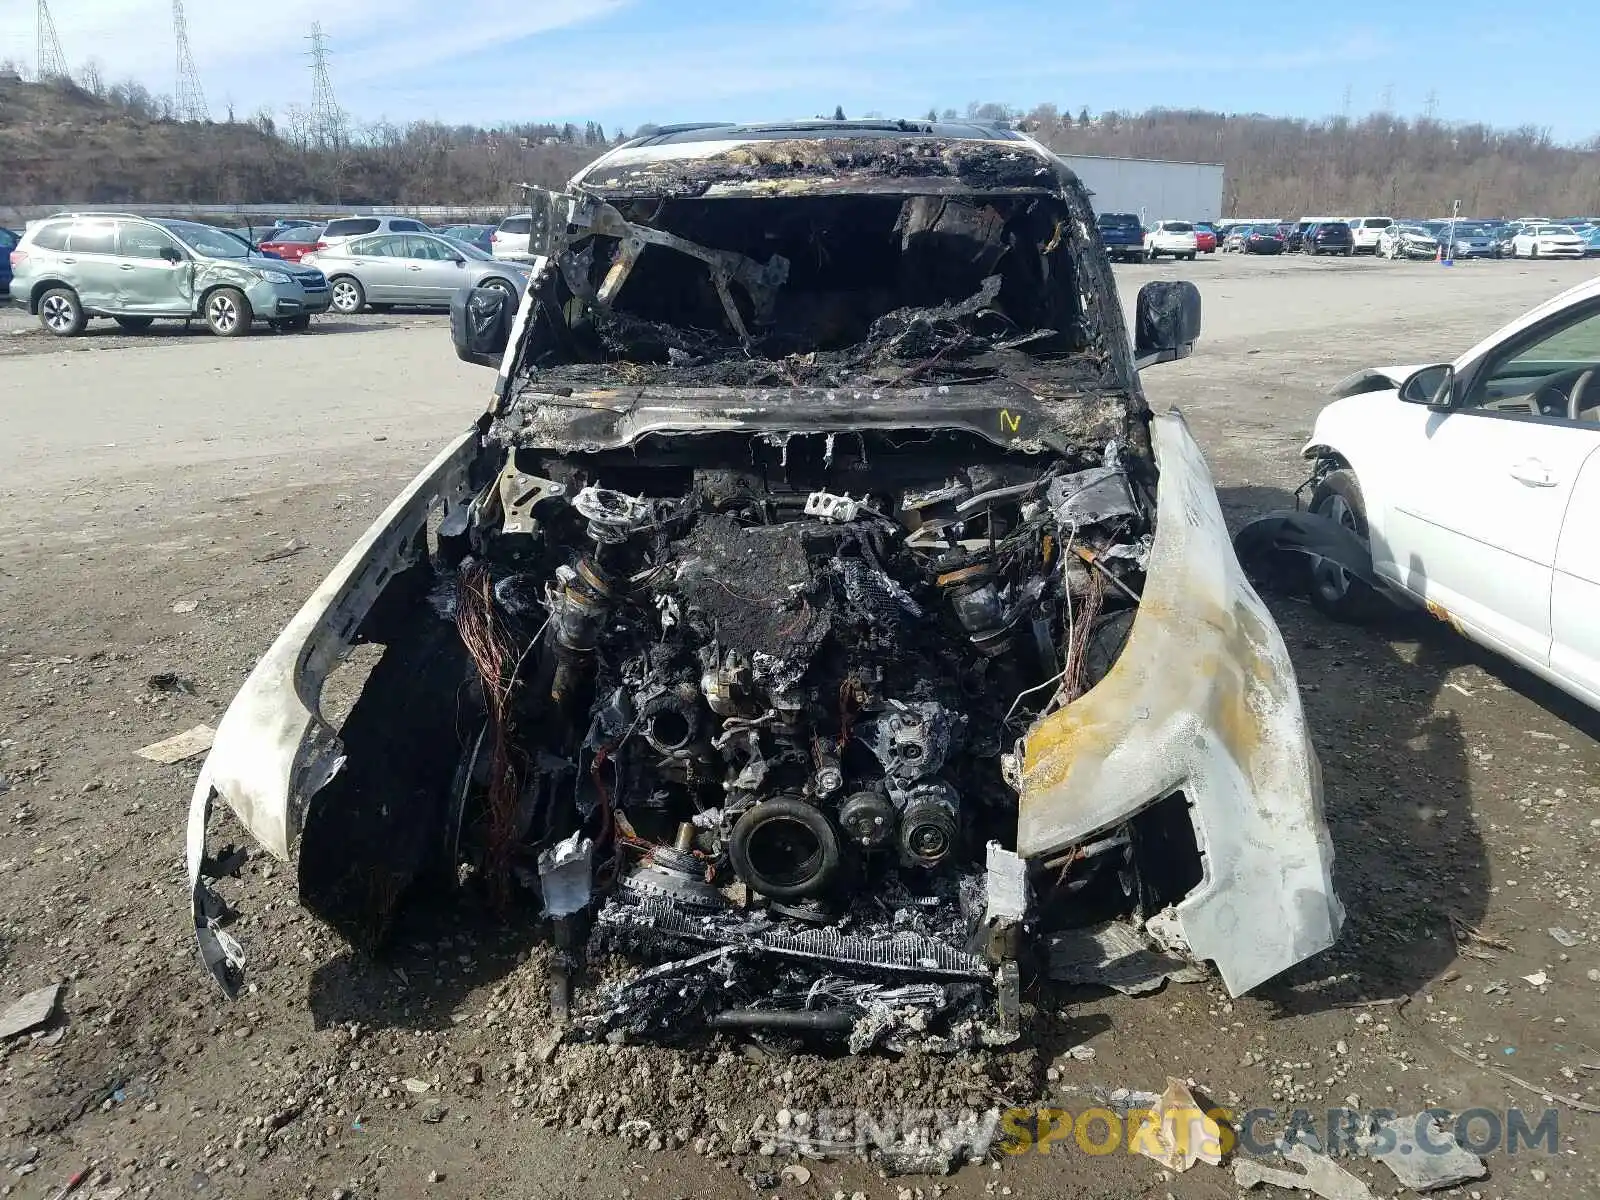 9 Photograph of a damaged car SALE97EU4L2016171 LAND ROVER DEFENDER 2020